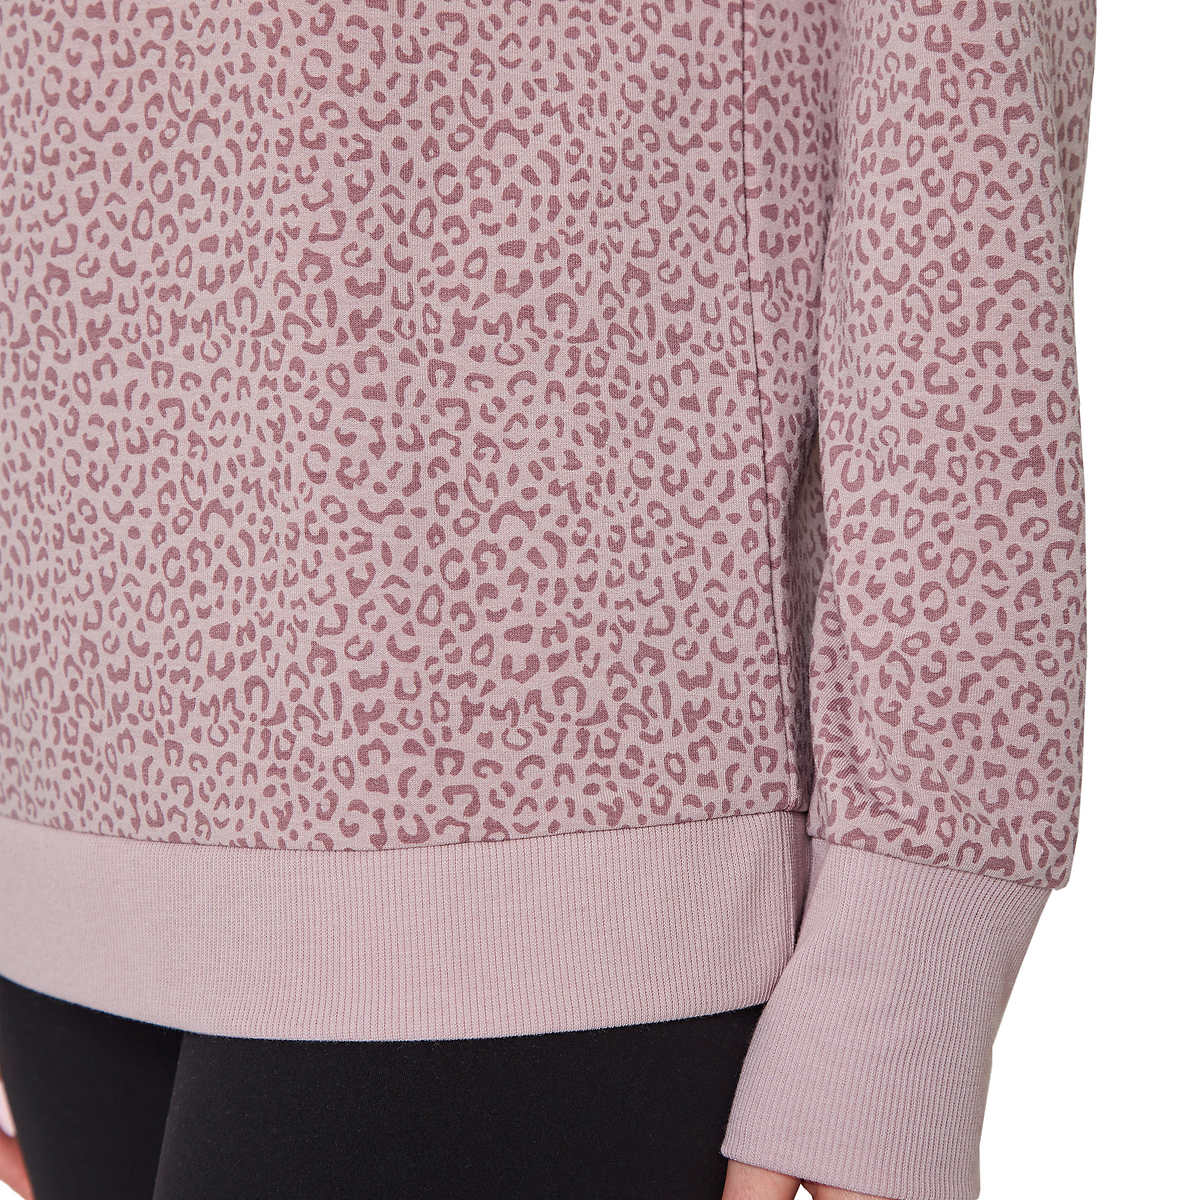 Mondetta Women's Leopard Print Soft Moisture Wicking Relaxed Fit Sweatshirt Top